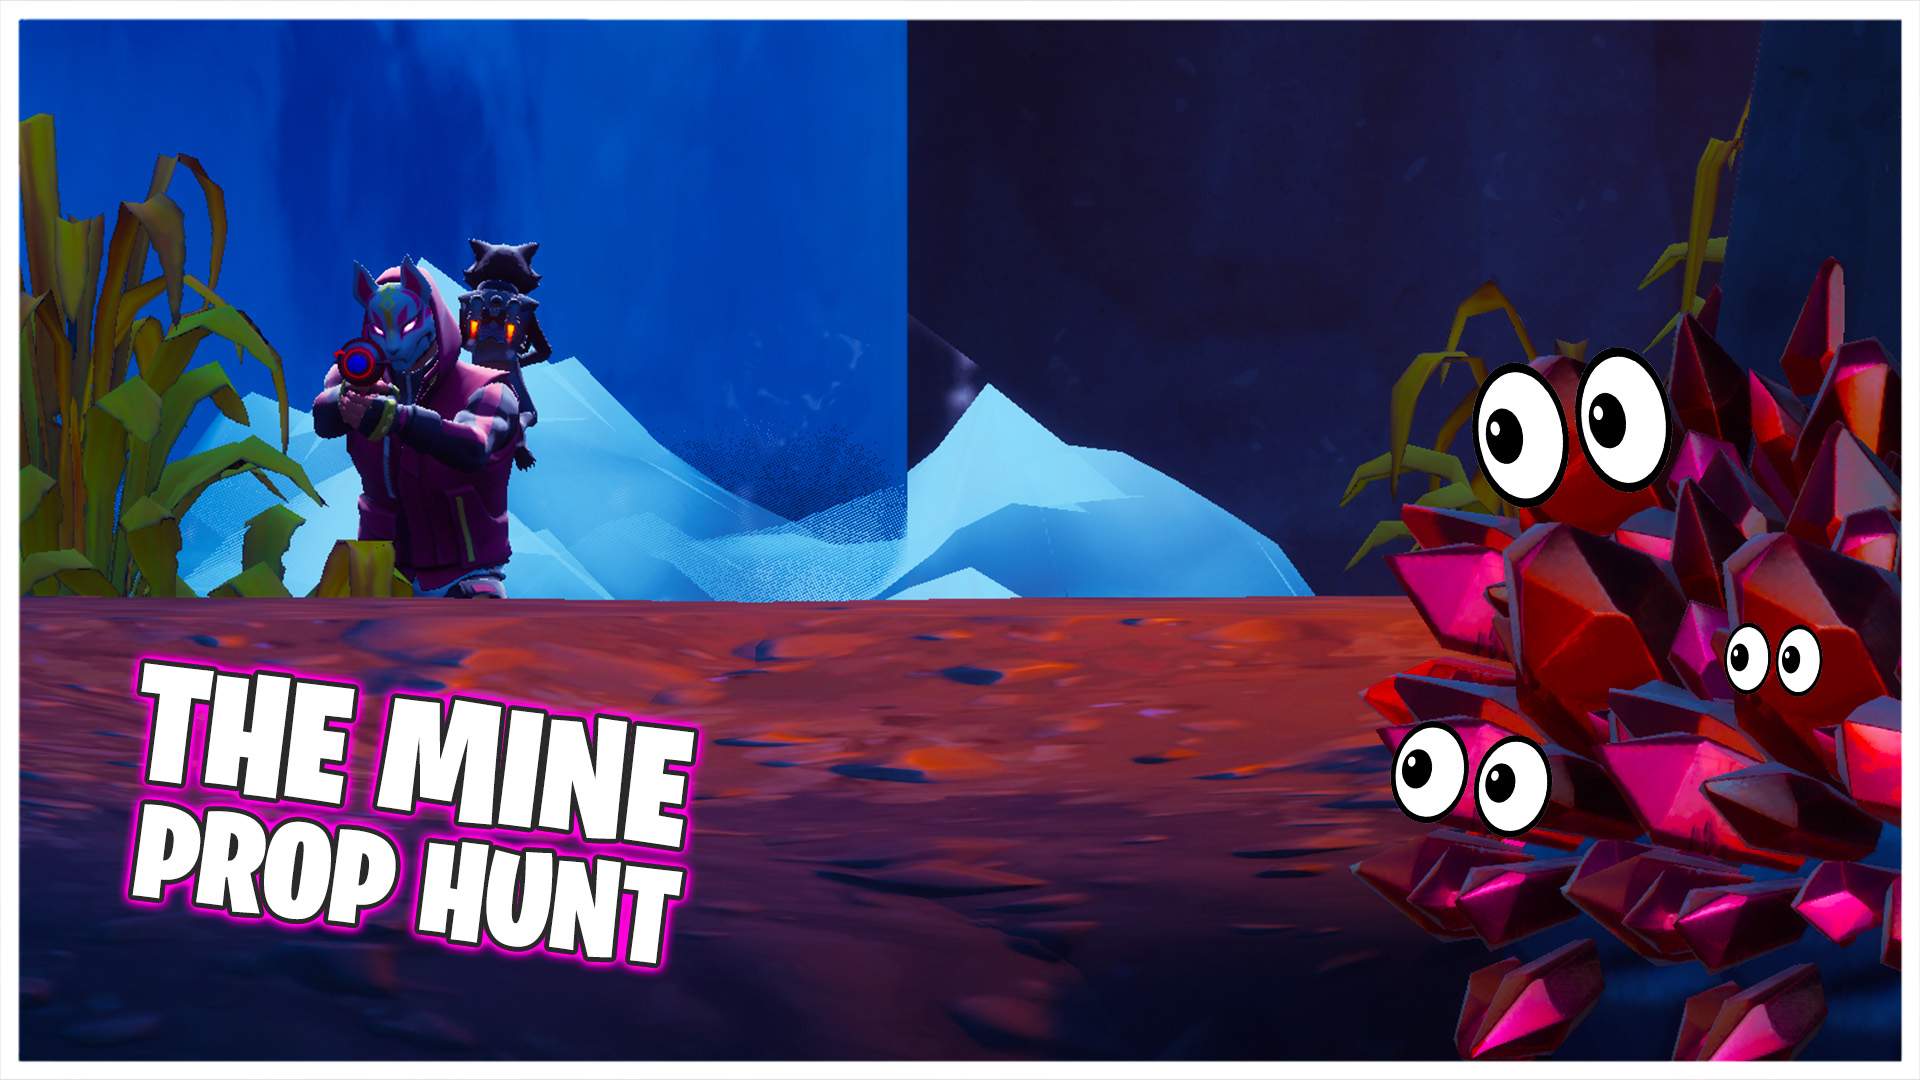 In the mine - Prop hunt